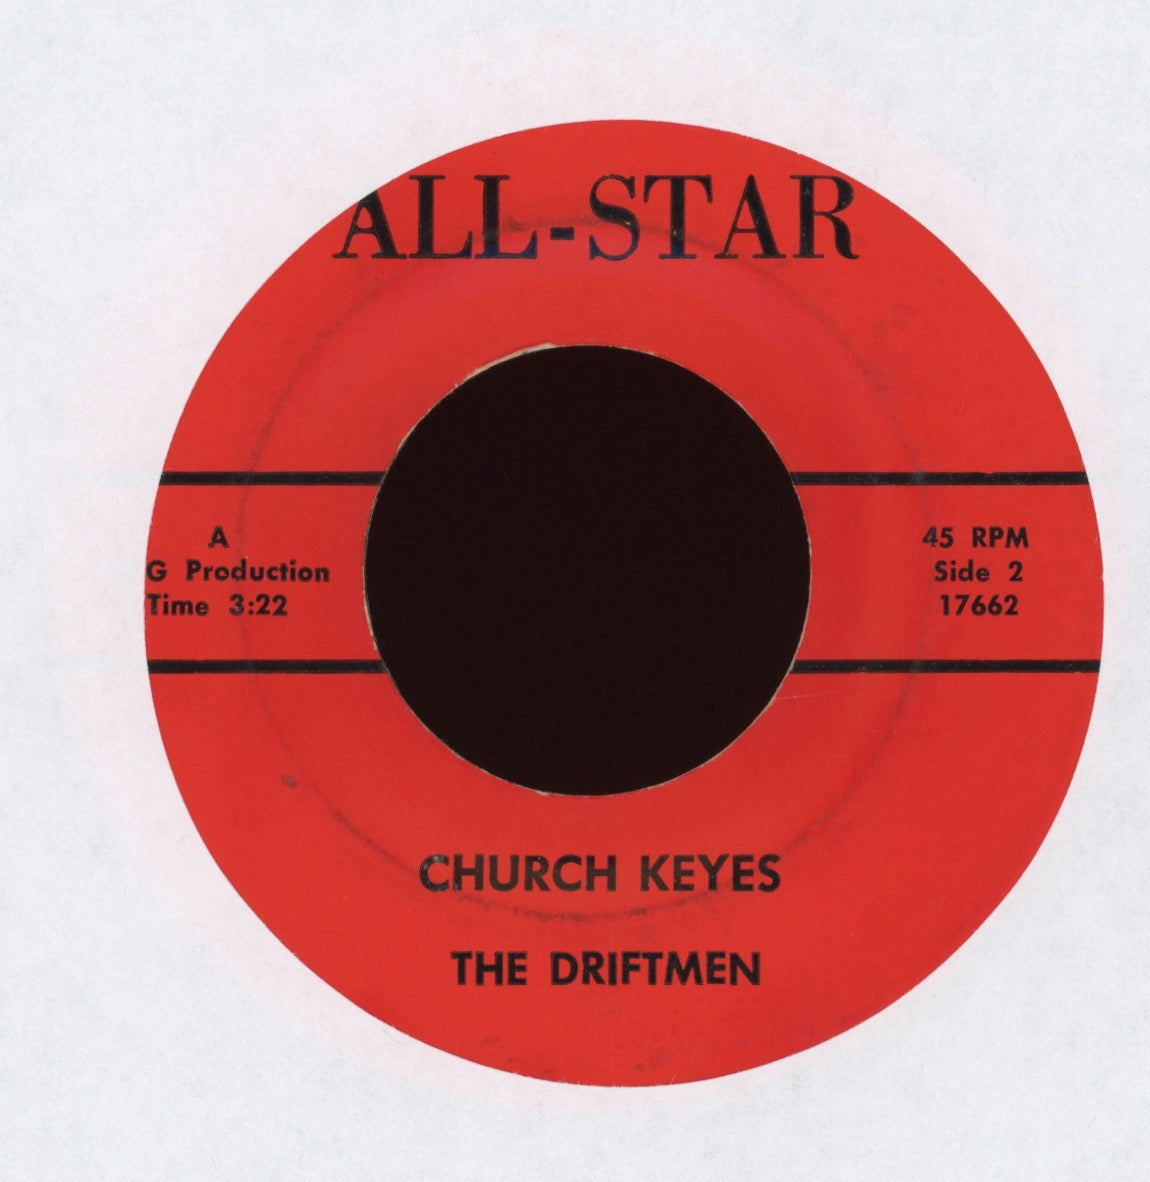 The Driftmen - Newbeat / Church Keyes on All Star Obscure Rite Press Instro Surf 45